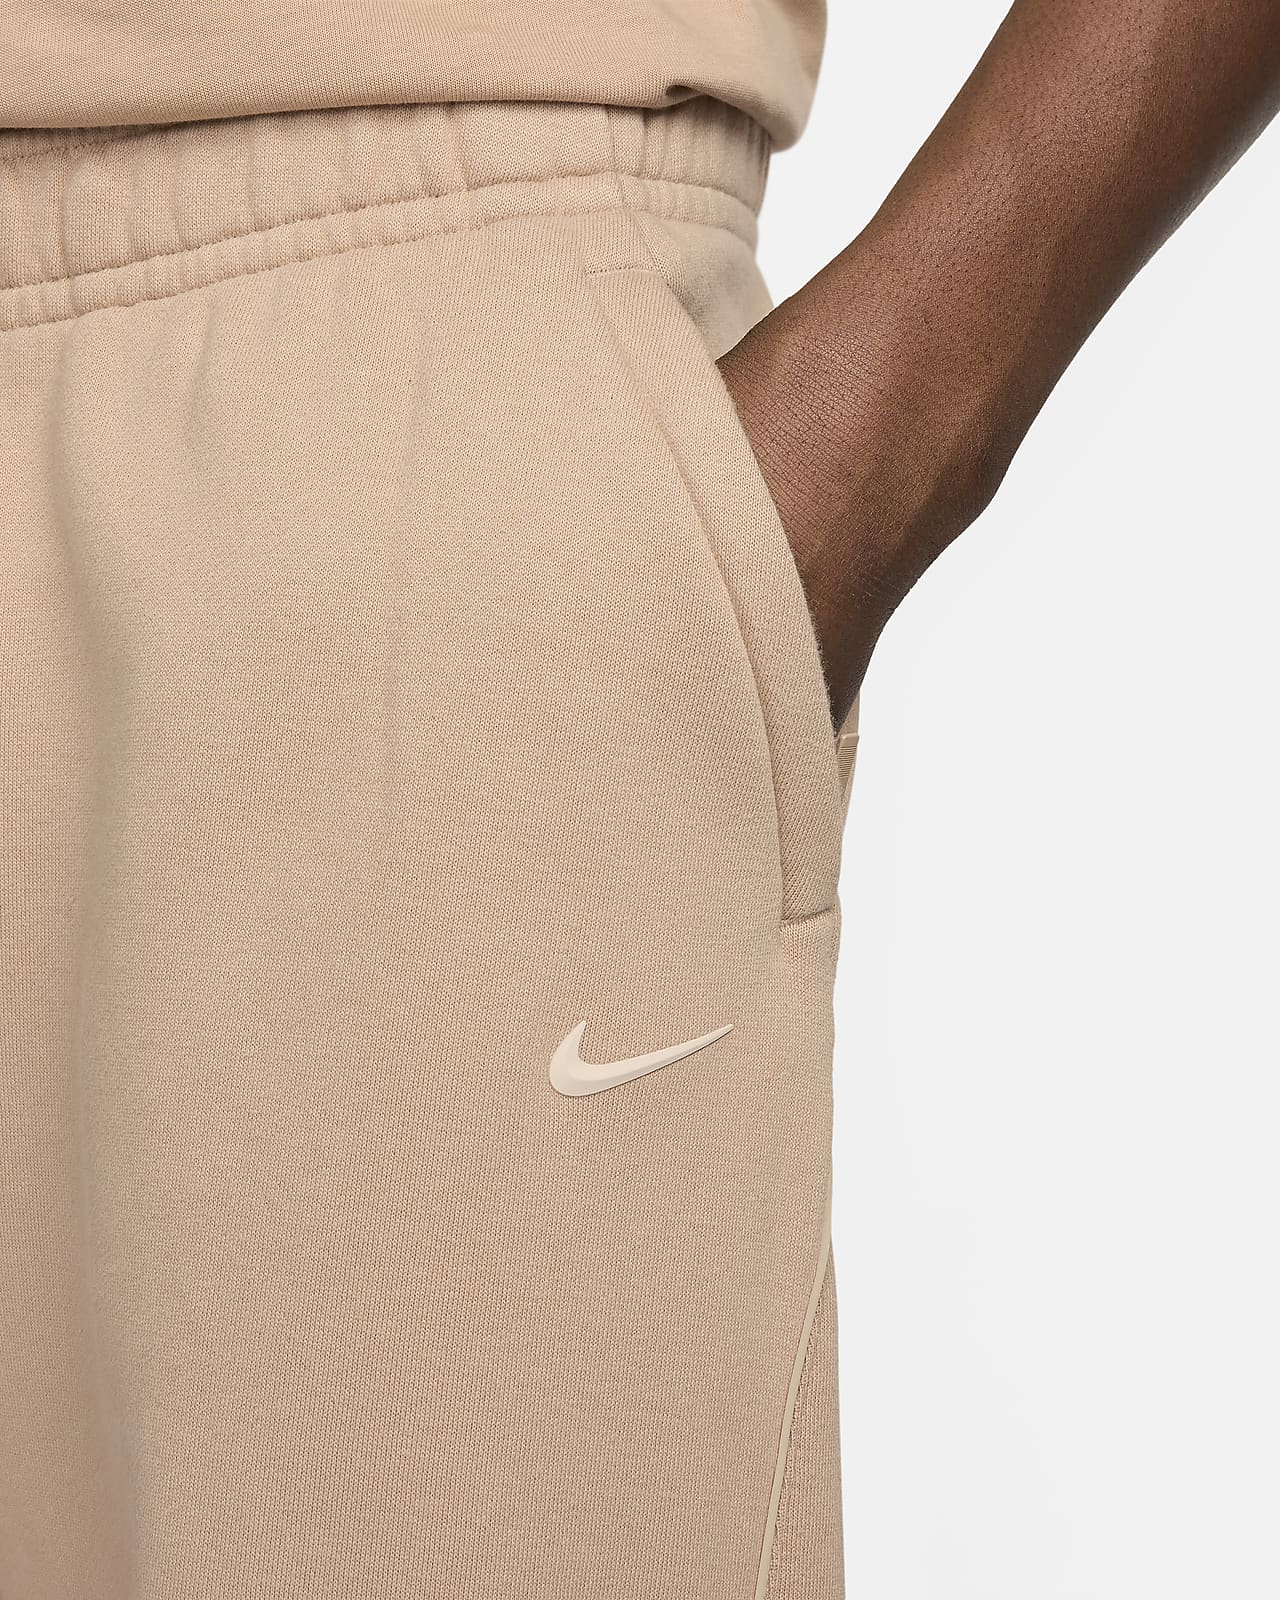 Nike x NOCTA Tech Fleece Open Hem Pant Black - SS23 - US